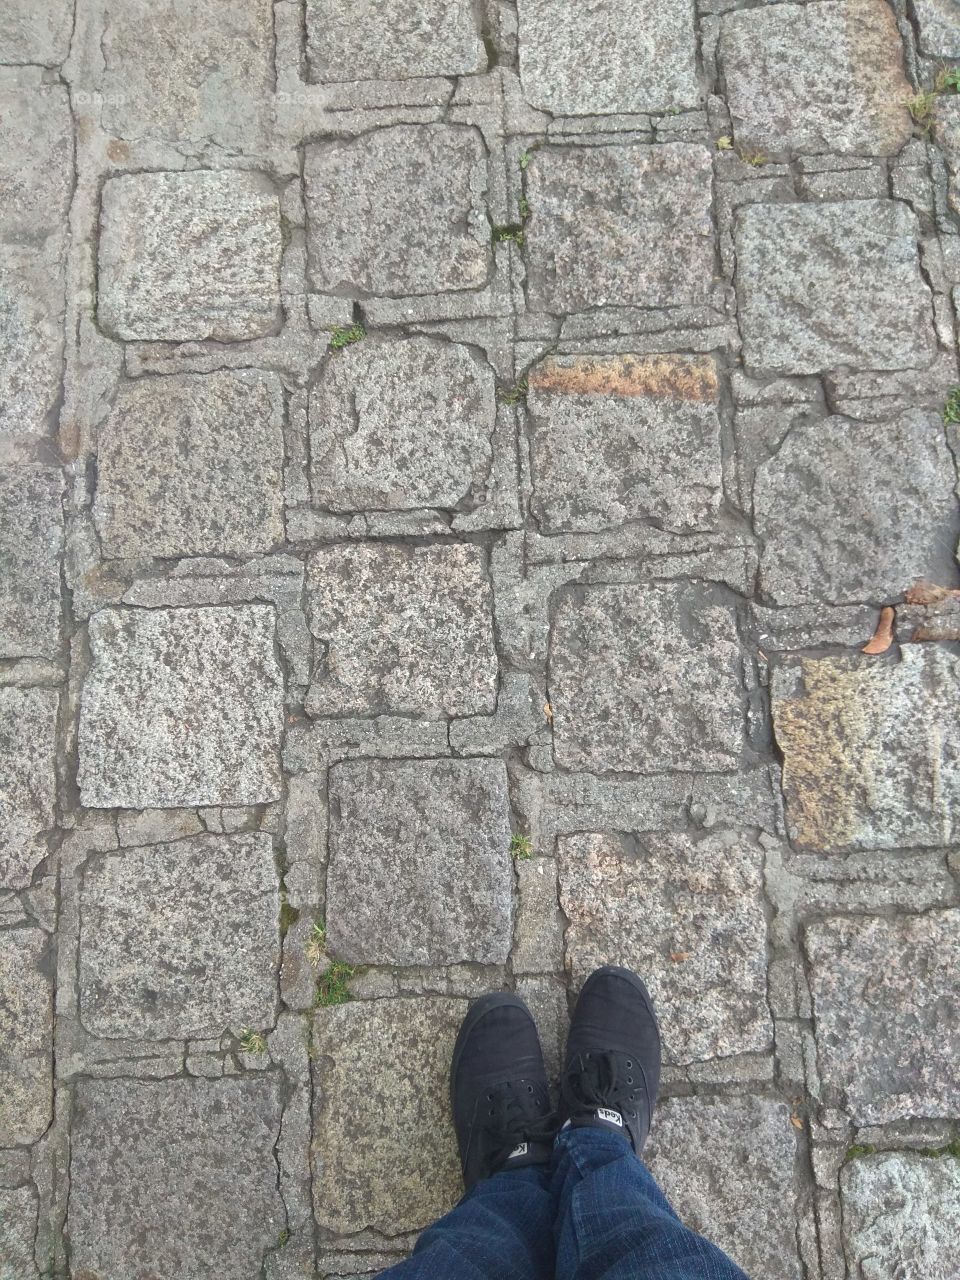 Do you walk home?

#sidewalk #shoes #ground #outdoors #city #home #walk #gray #black